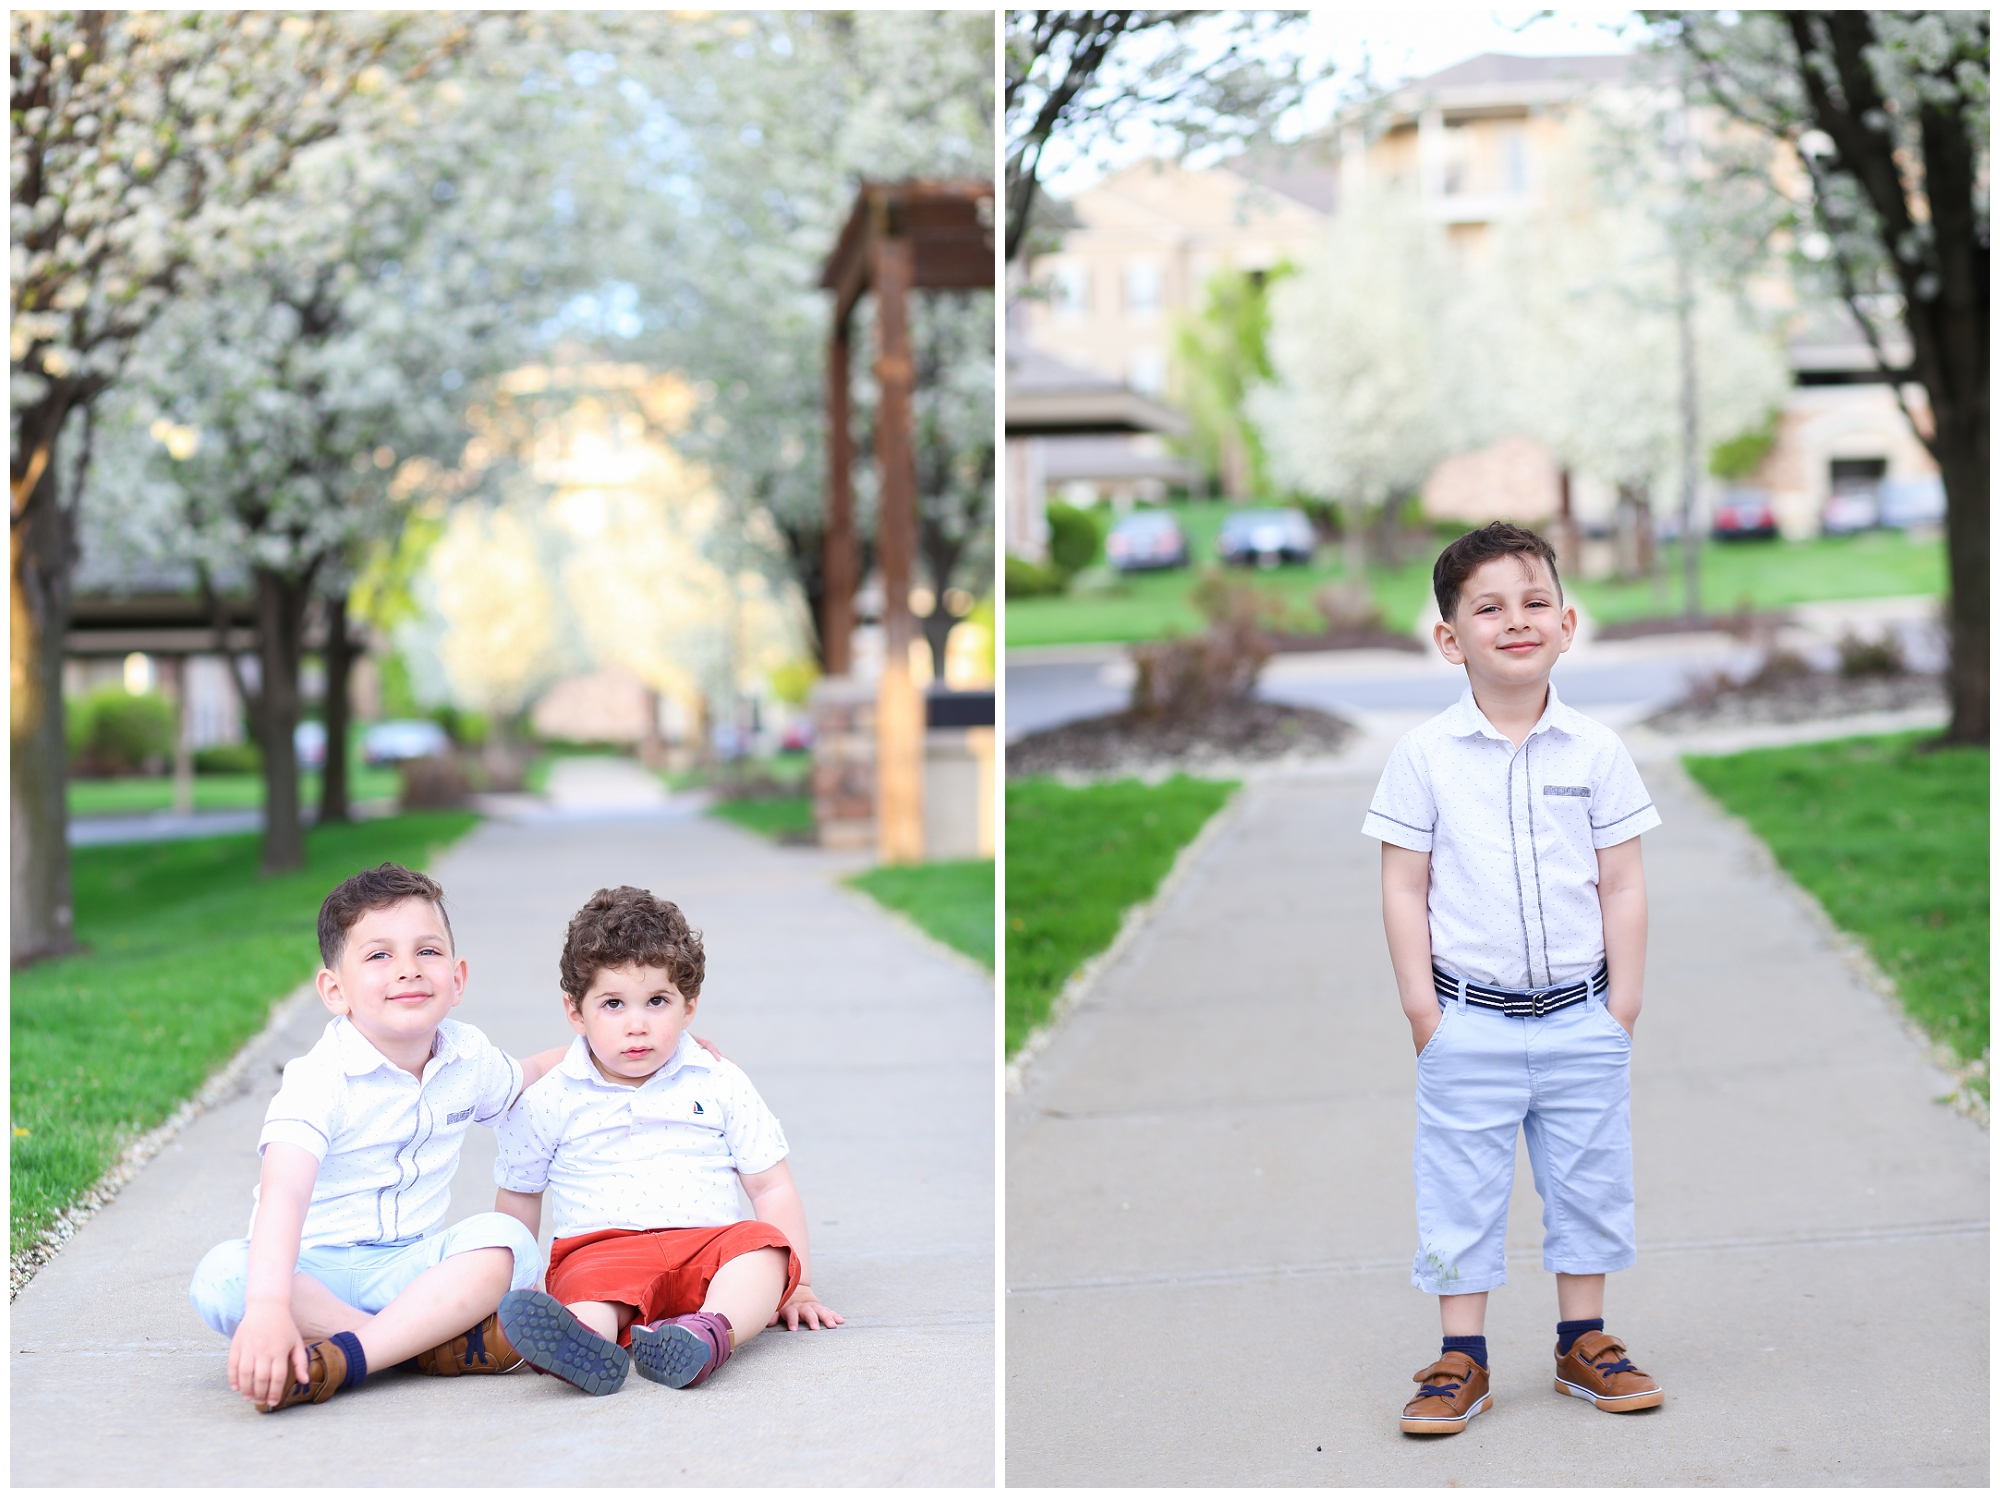 Outdoor Spring Family Portraits - Lifestyle Portrait Wedding Photographer Kansas City Overland Park 